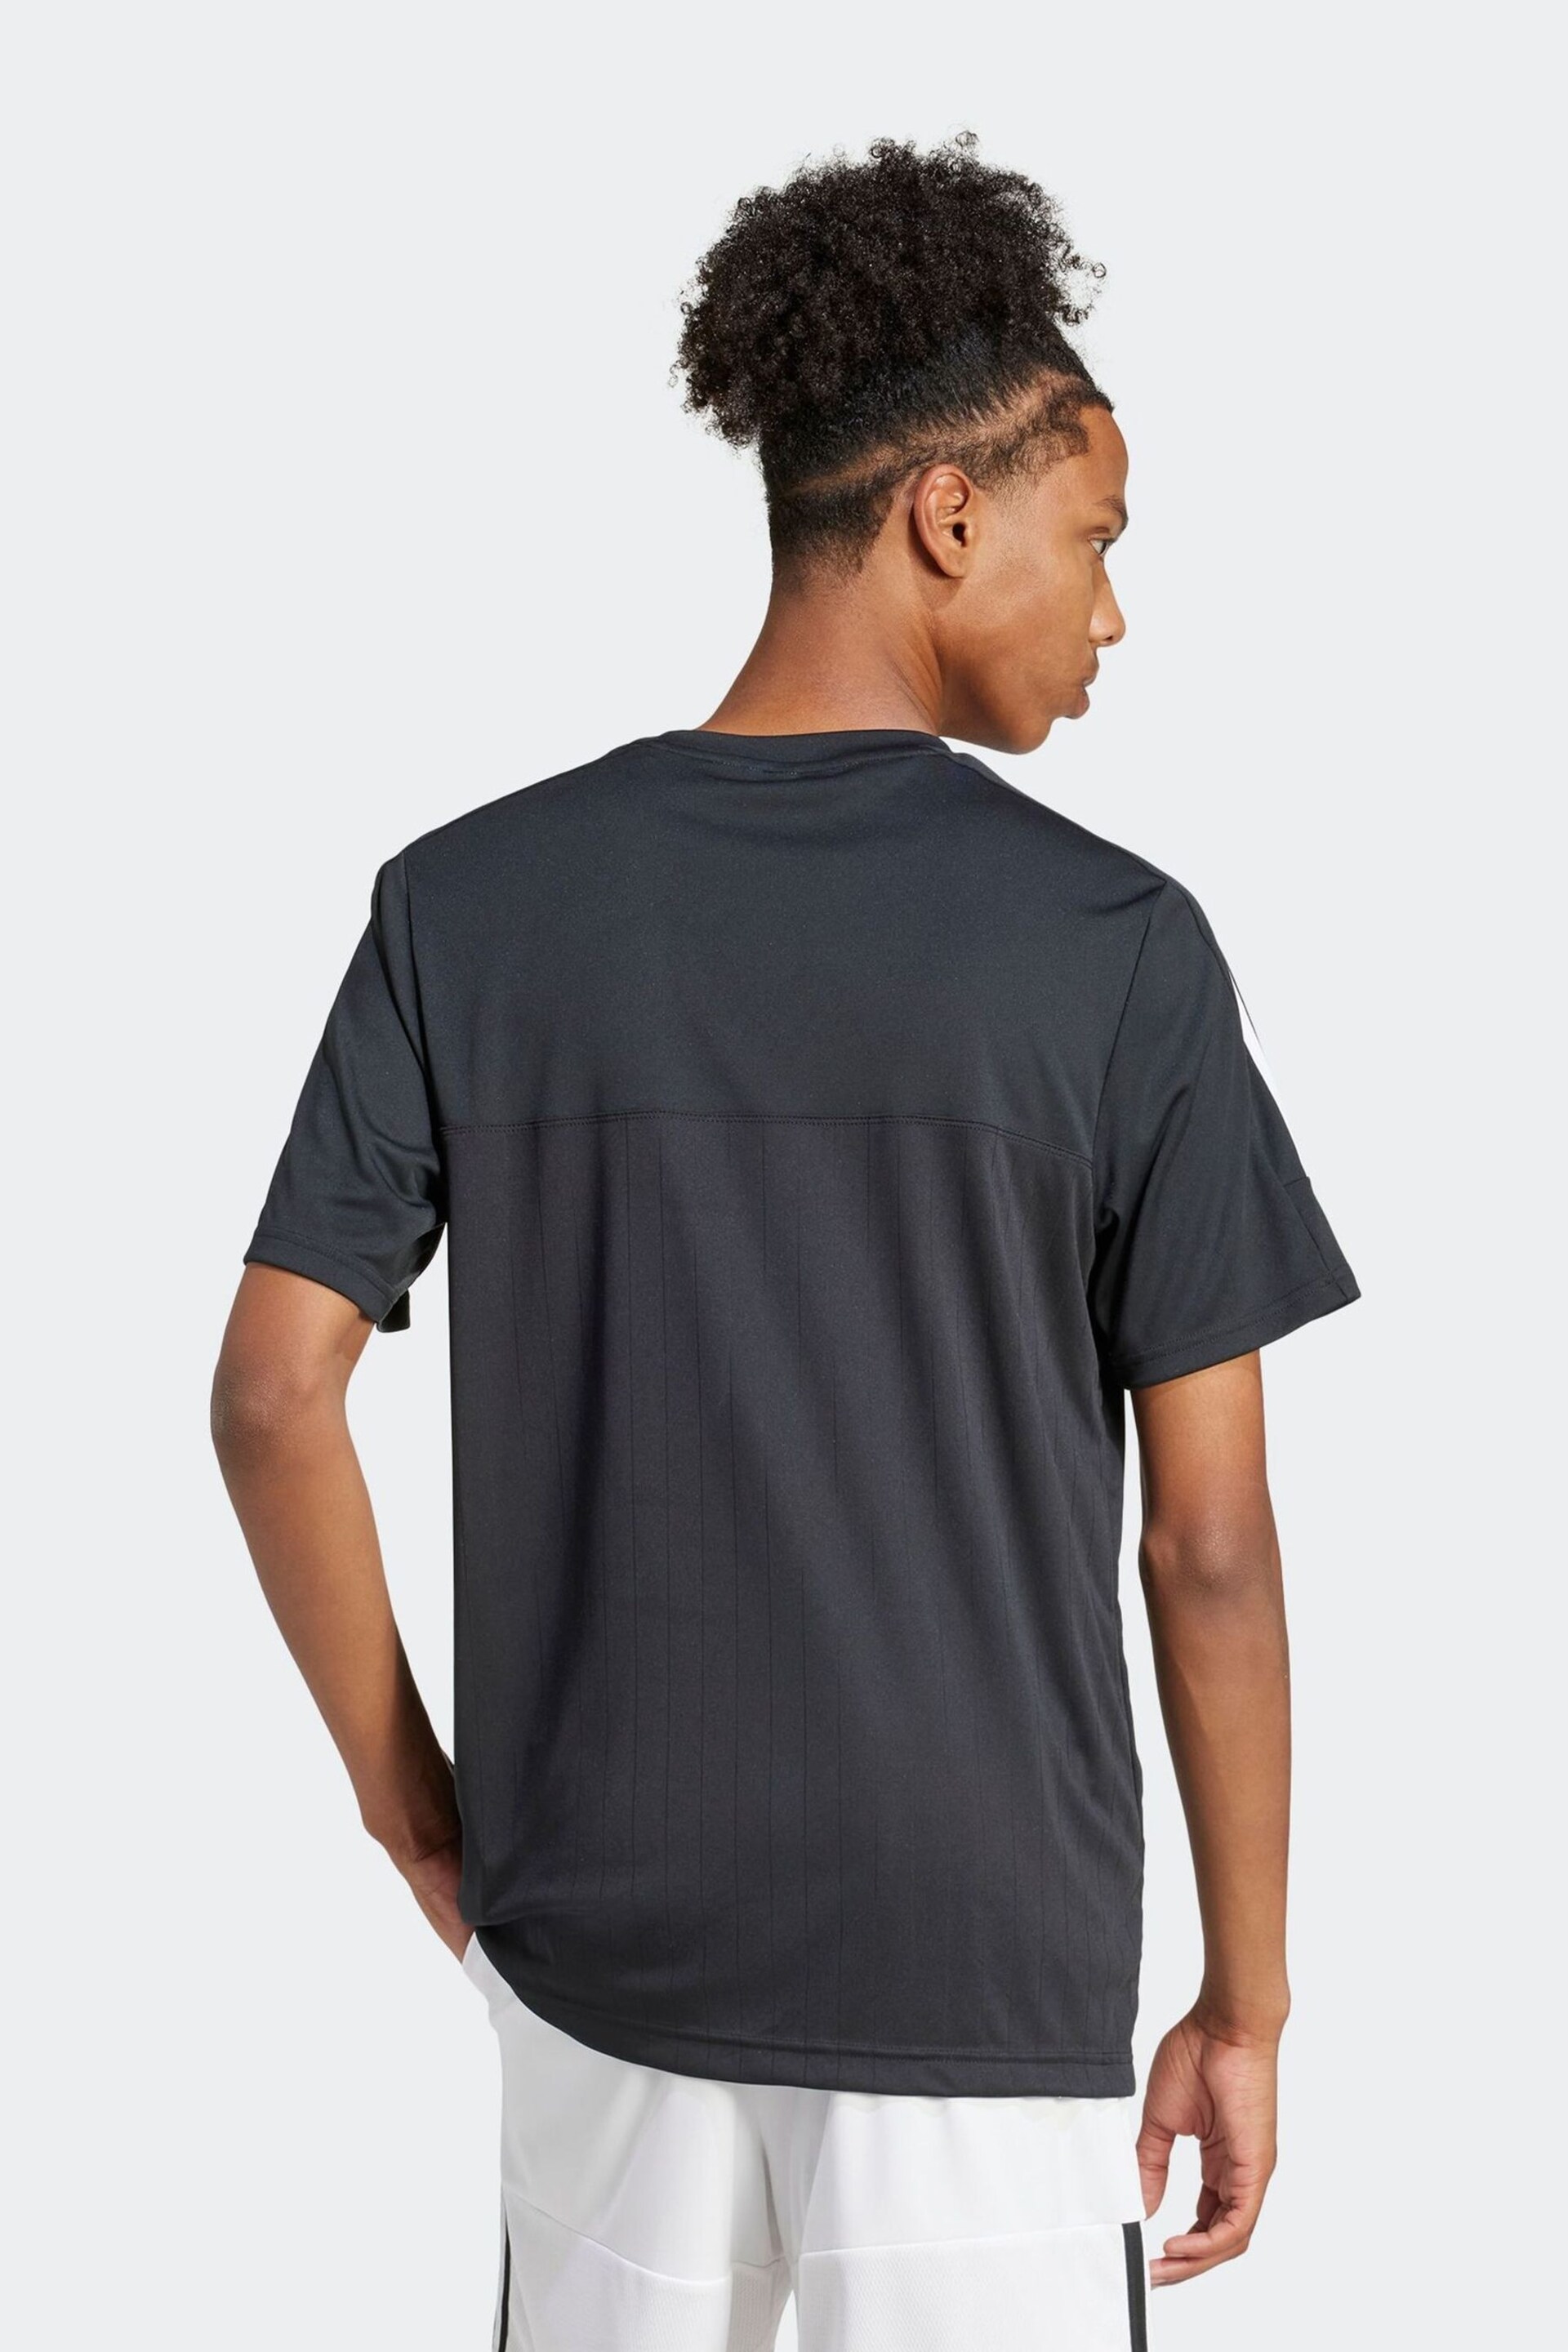 adidas Black Tiro T-Shirt - Image 2 of 7